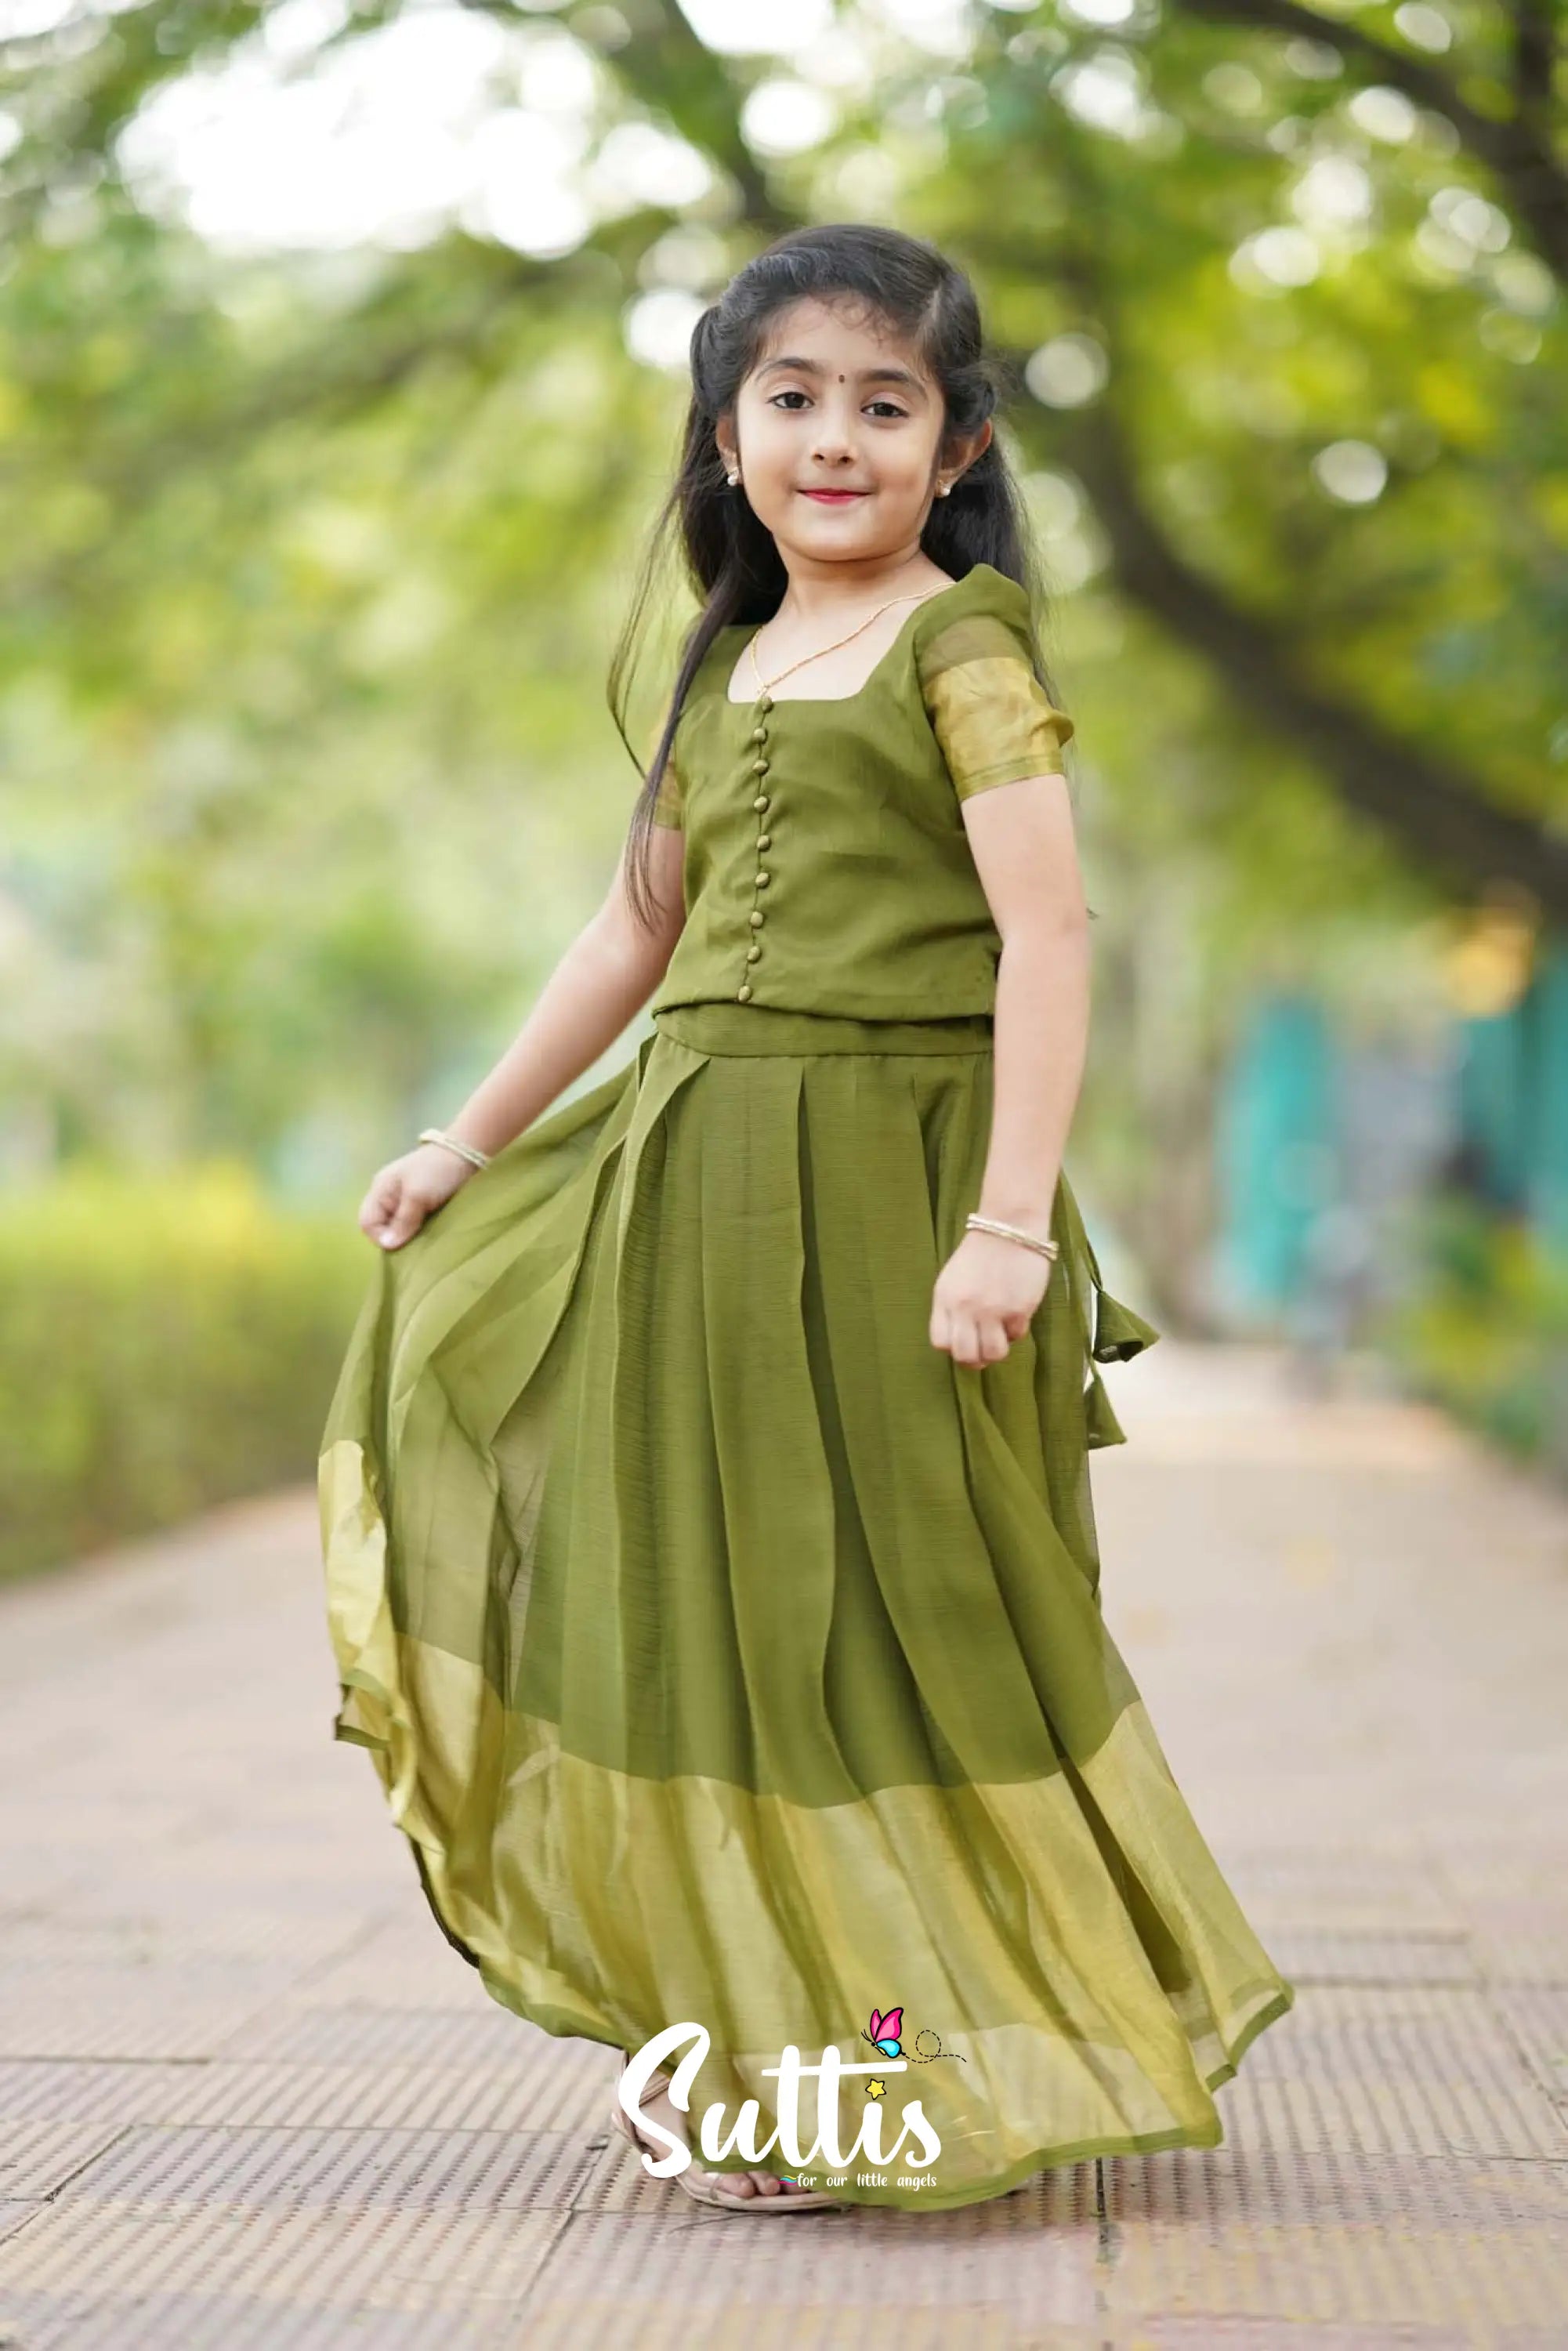 Zara - Olive Green Crop Top And Skirt Kids-Suttis